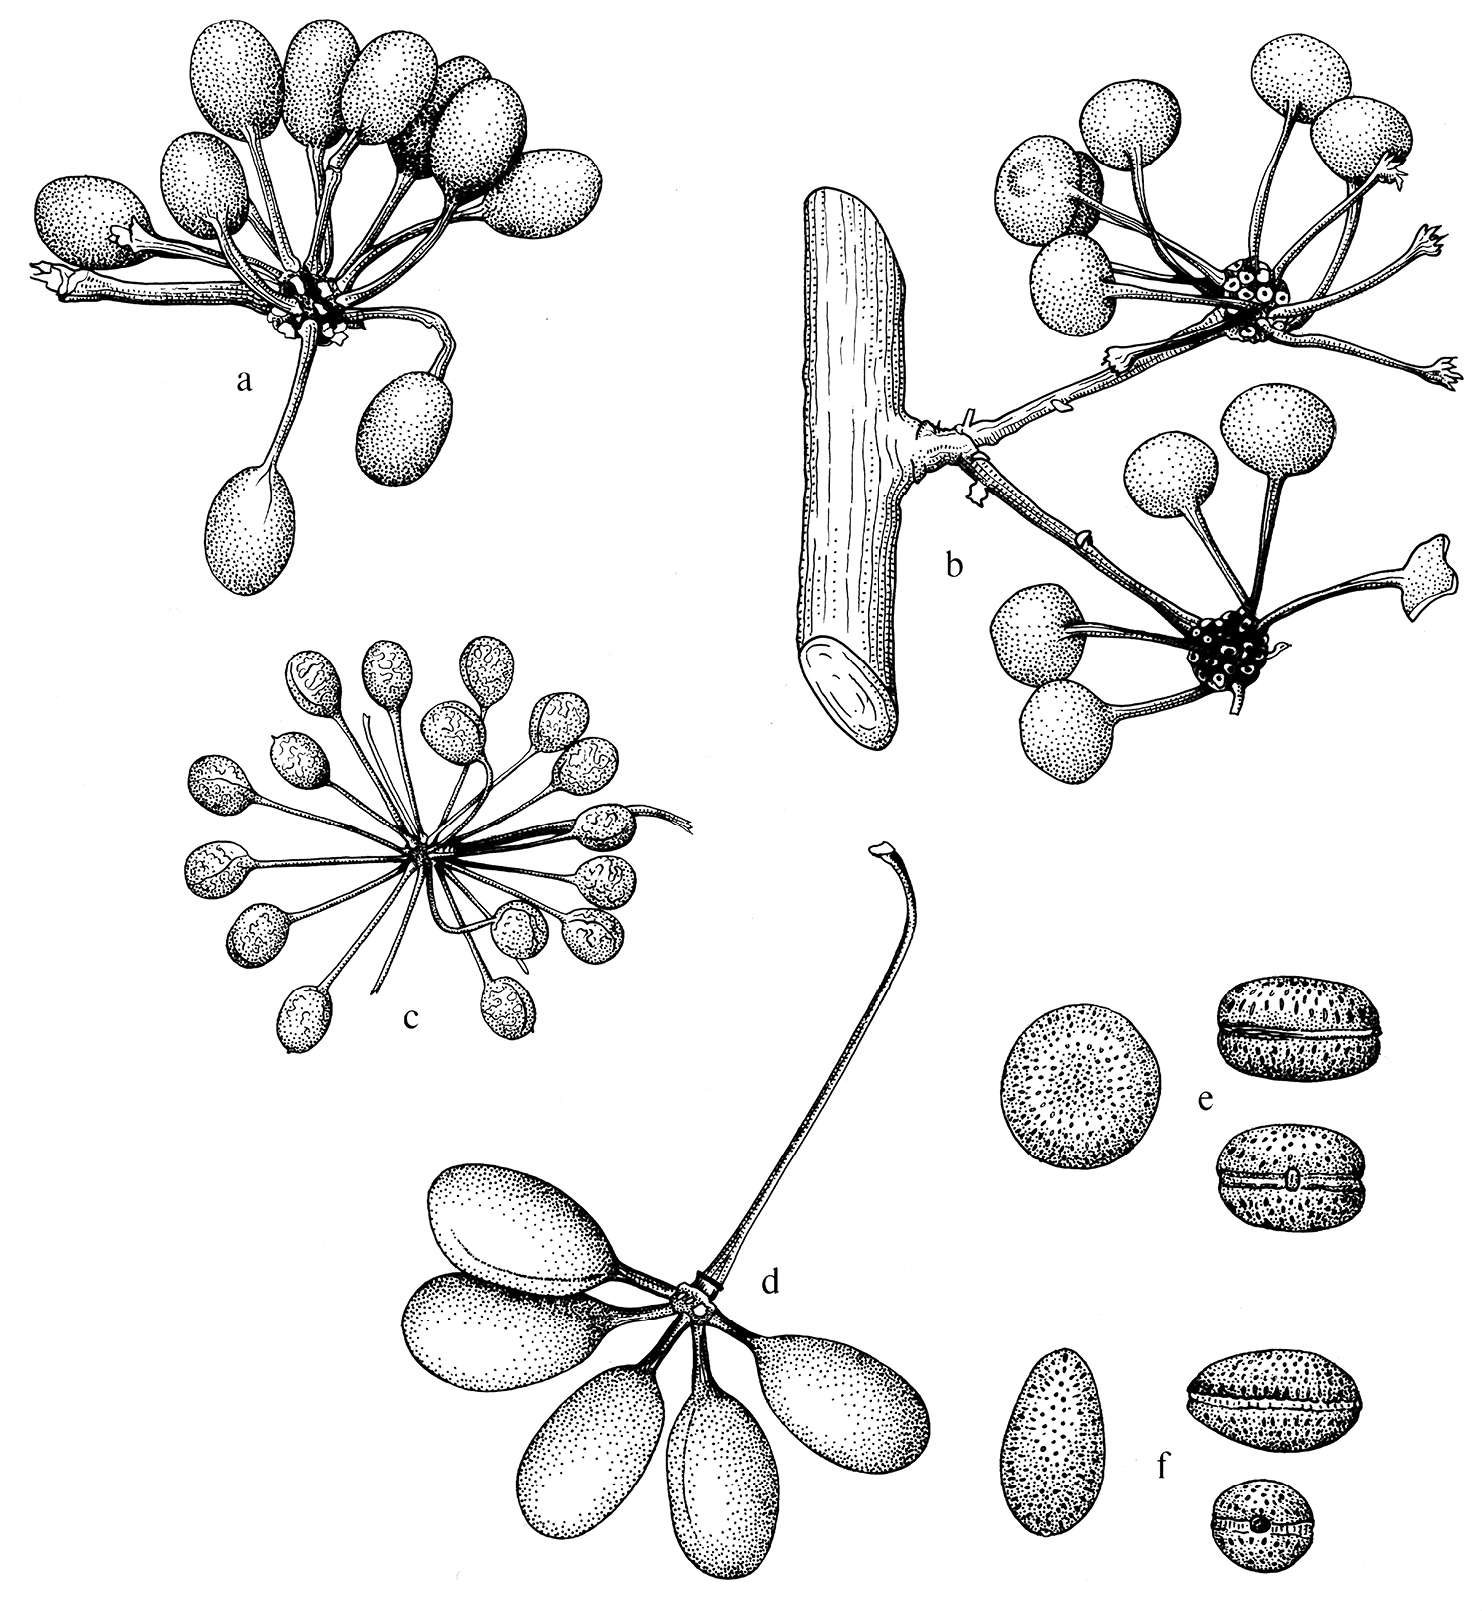 Cremastosperma megalophyllum R. E. Fr.的圖片